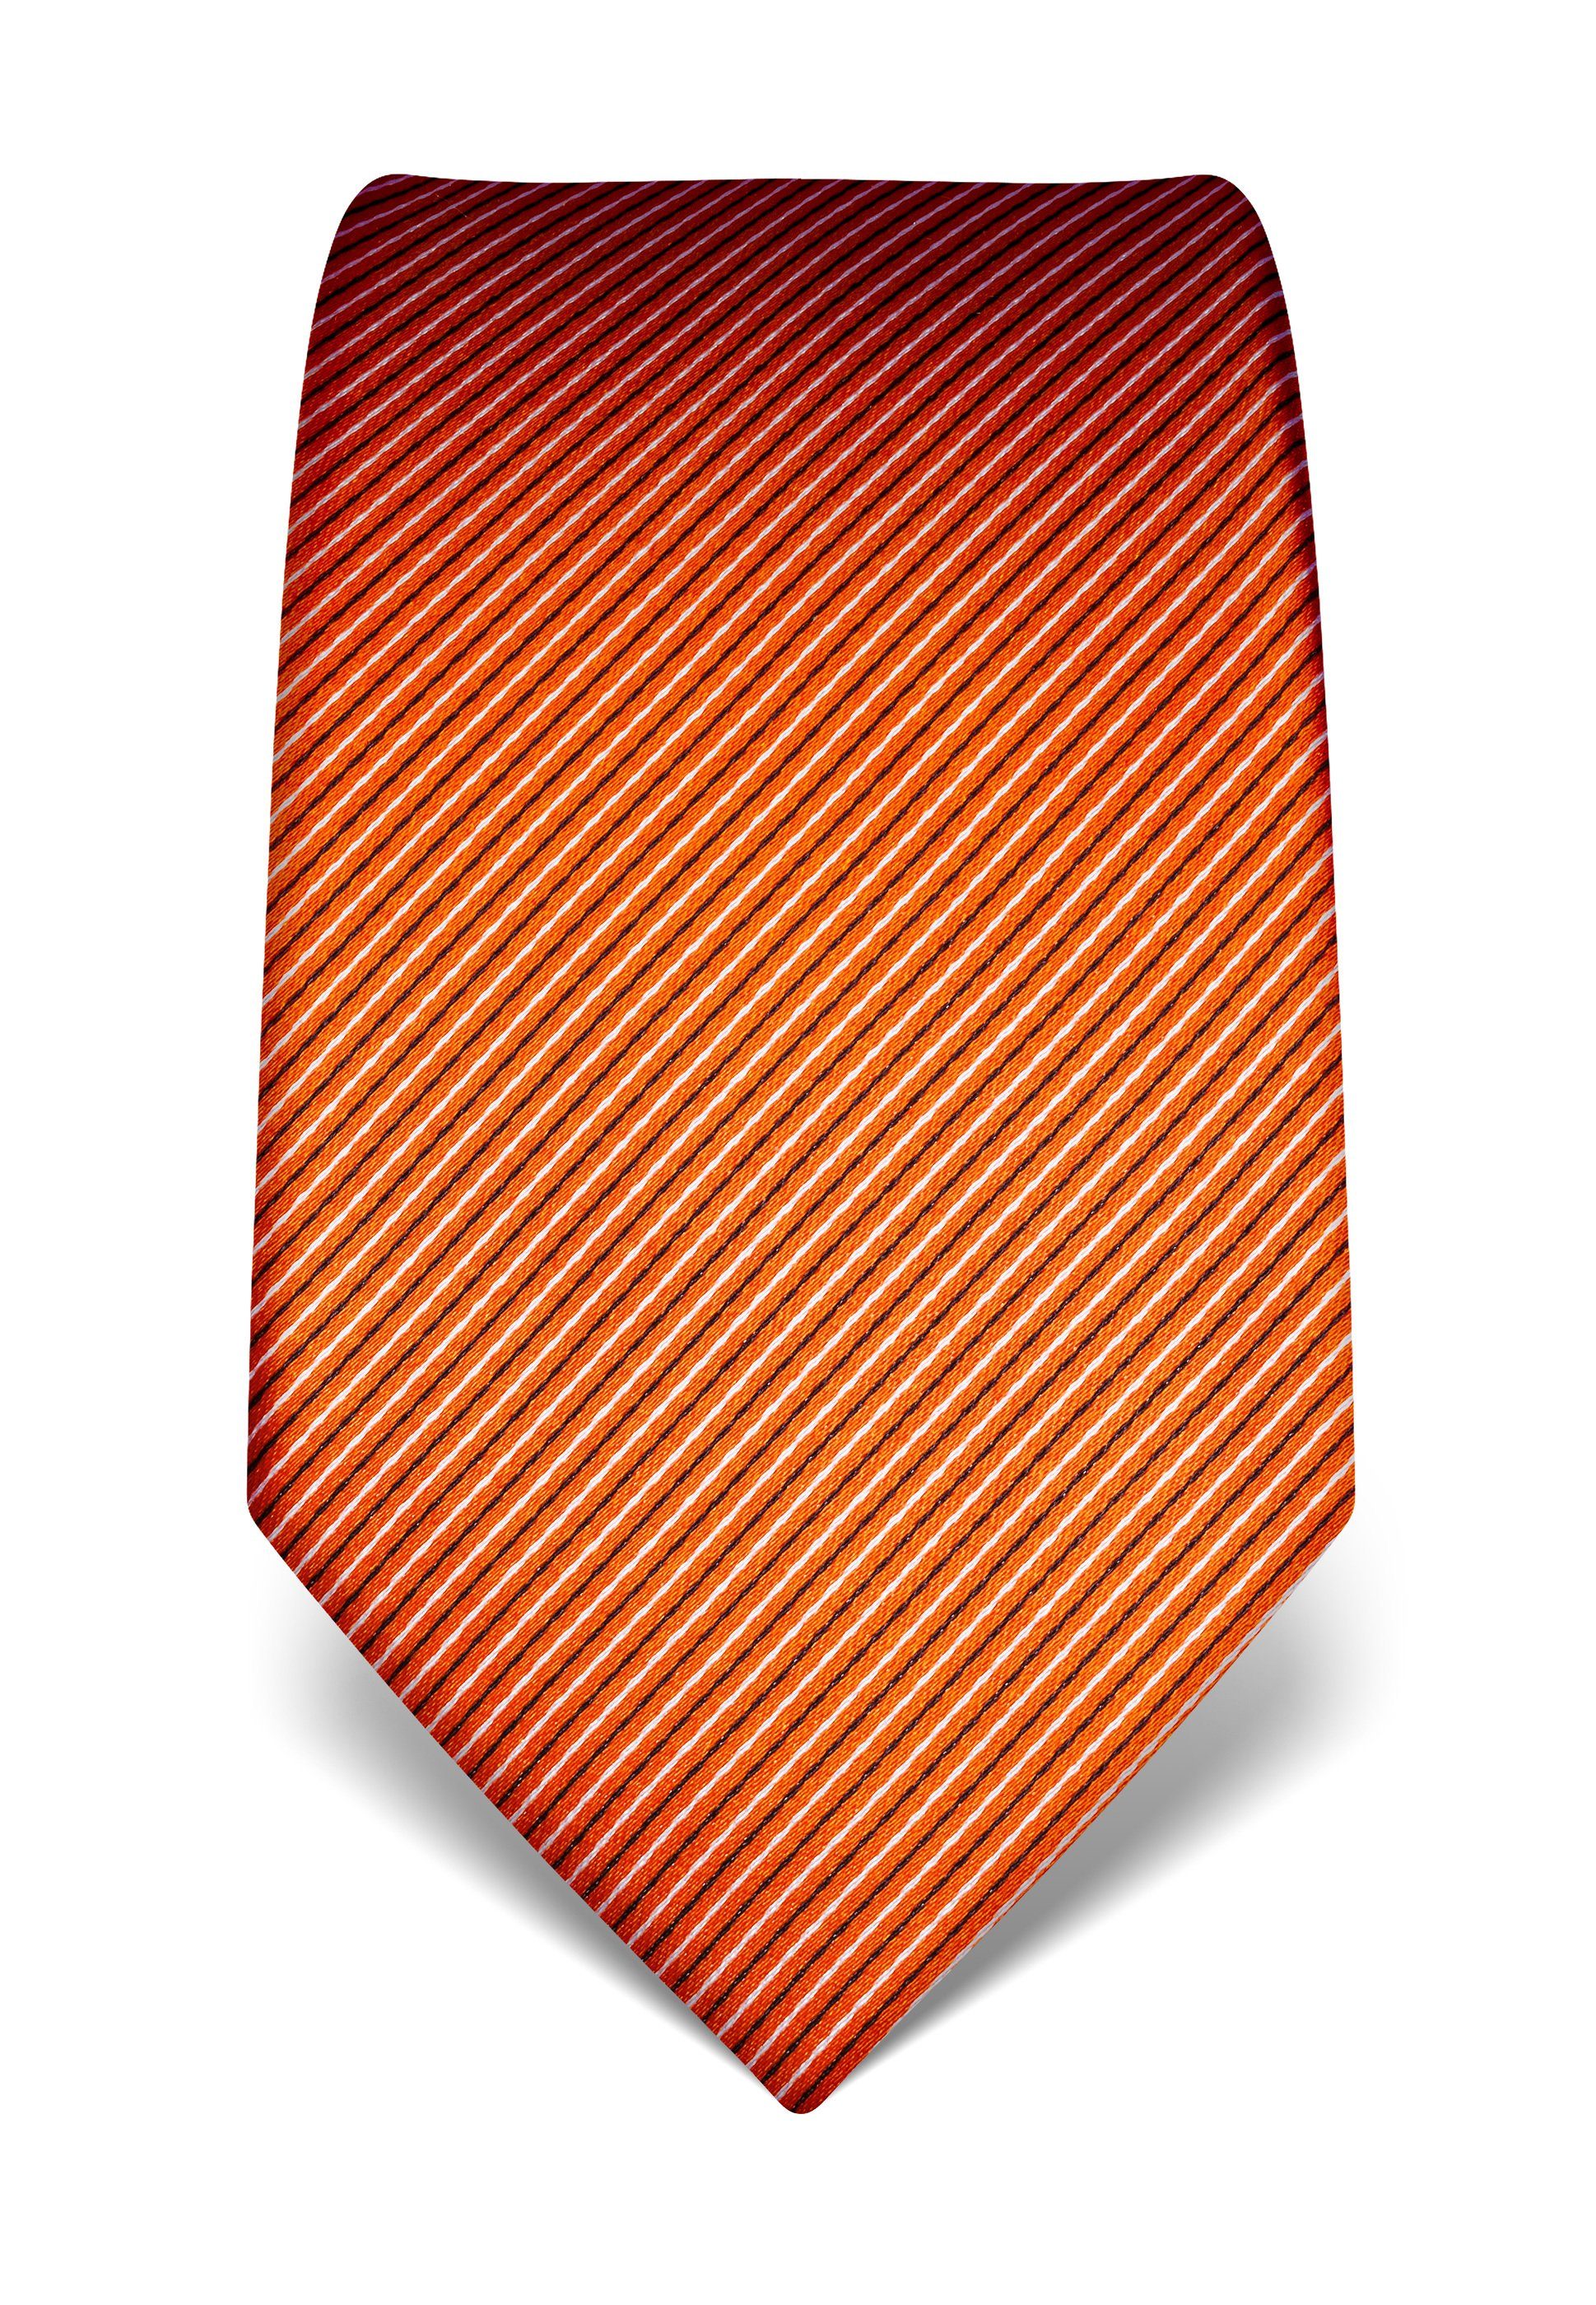 Krawatte Vincenzo orange gestreift Boretti